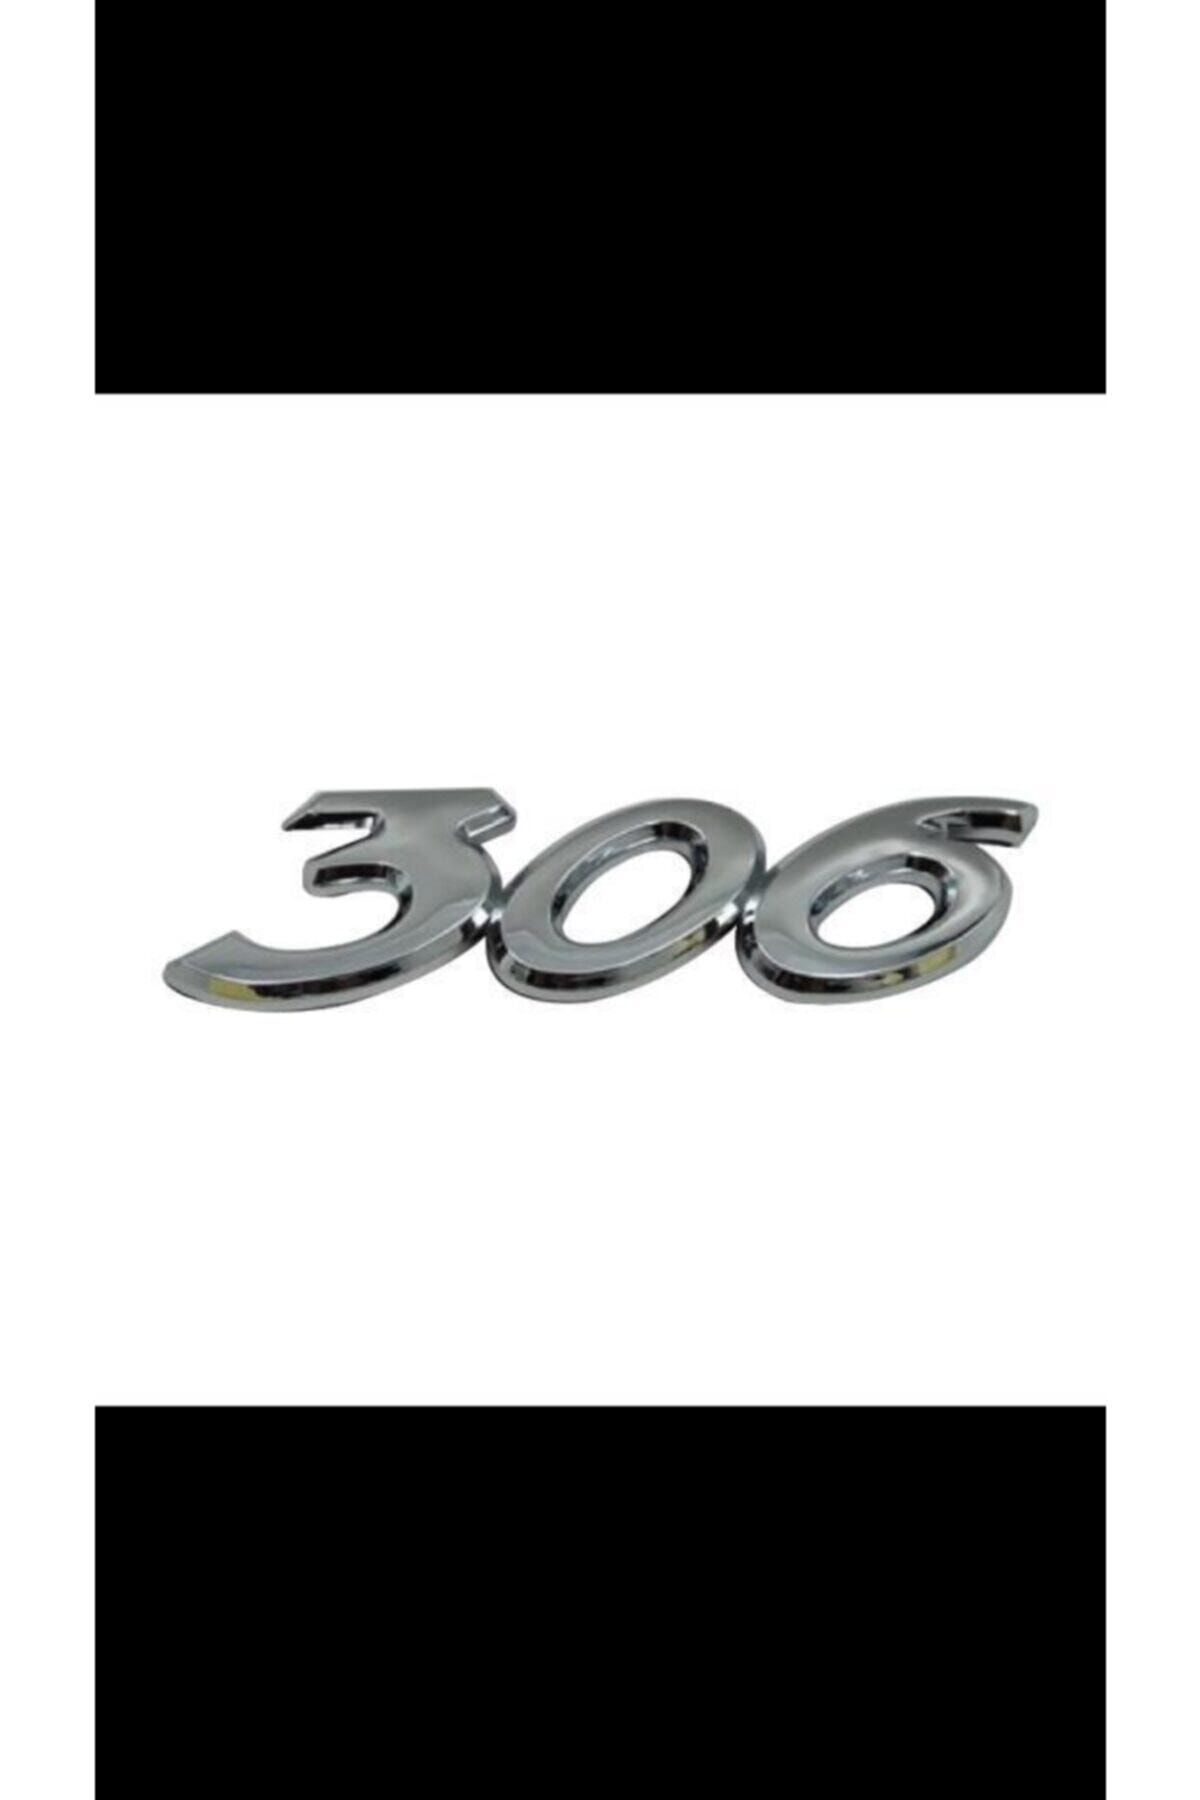 AÇIK OTOMOTİV Peugeot 306 Yazısı - Bagaj Kaput Üzerinde 8663q3